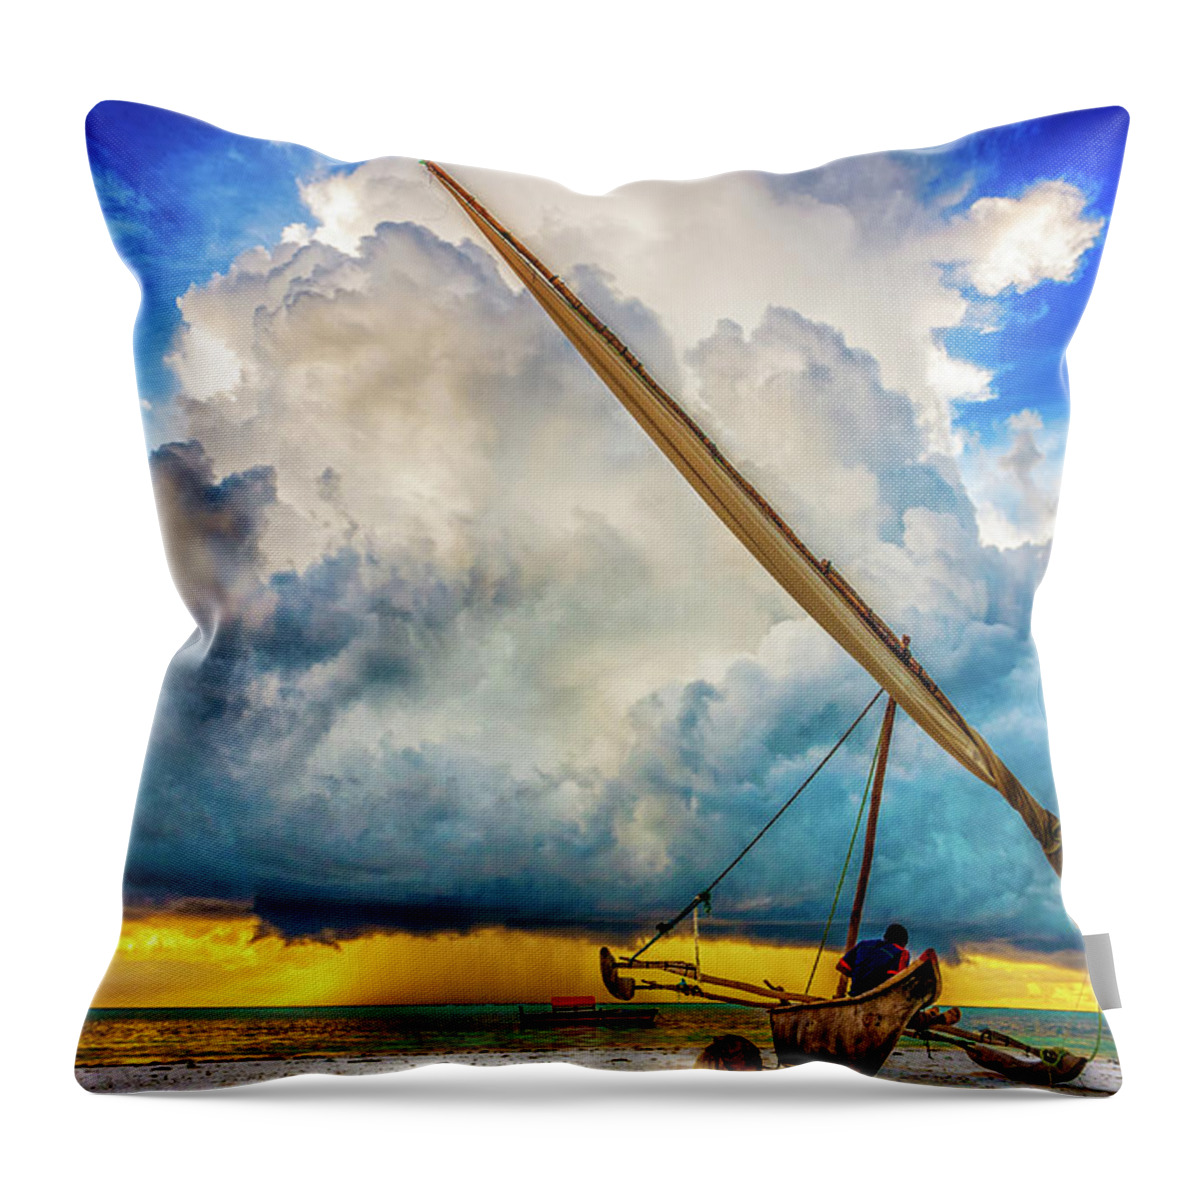 Scenics Throw Pillow featuring the photograph Fisherman Watching Storm Cloud, Zanzibar by Adamjasonmoore.com